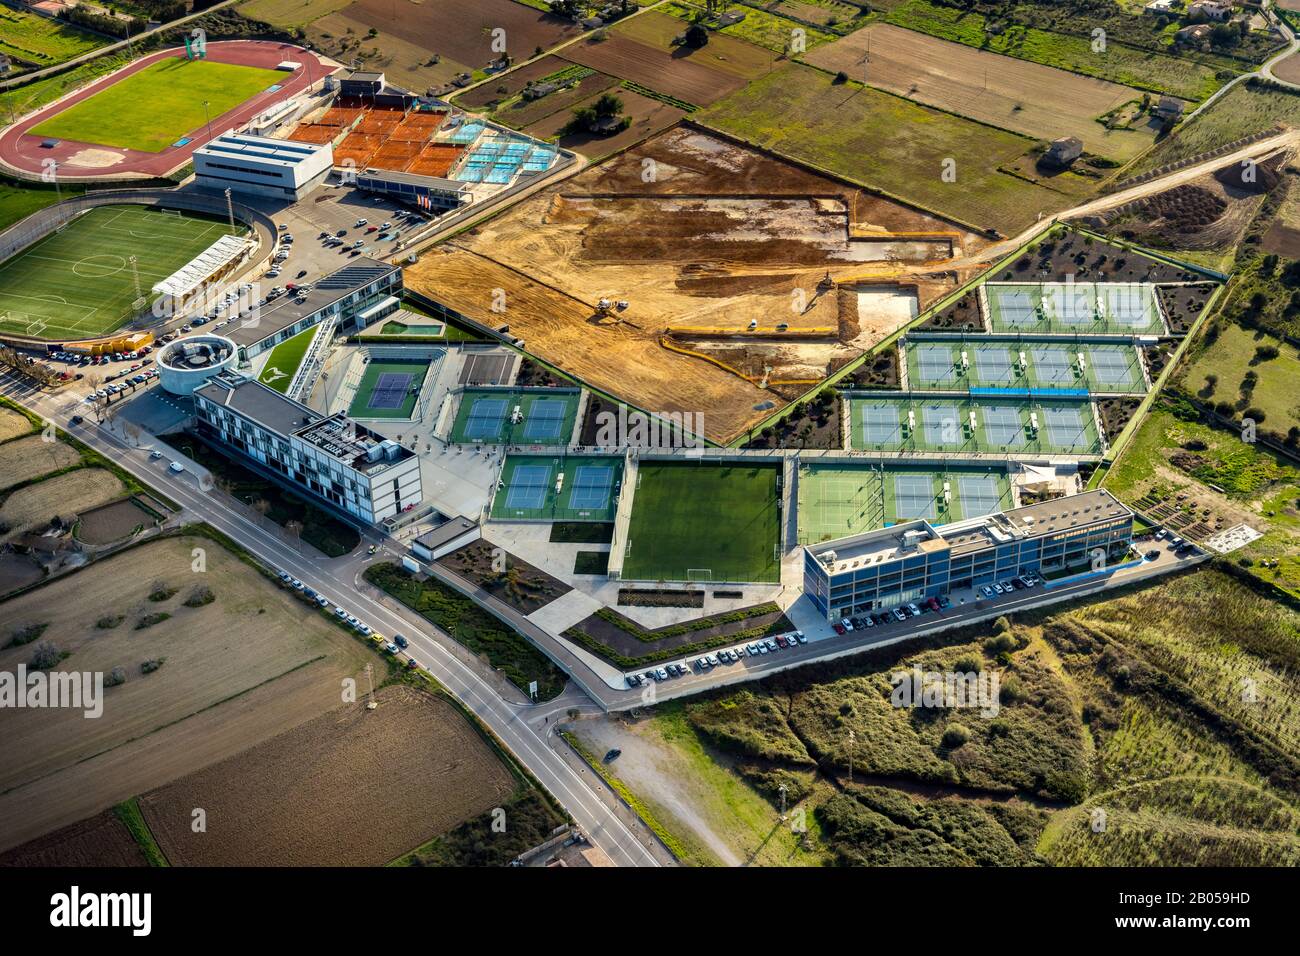 , aerial view, R.N. Sport Center, Rafael Nadal Tennis Center, Construction Site, Fartàritx, Manacor, Mallorca, Balearic Islands, Spain, Europe, Arena, Stock Photo